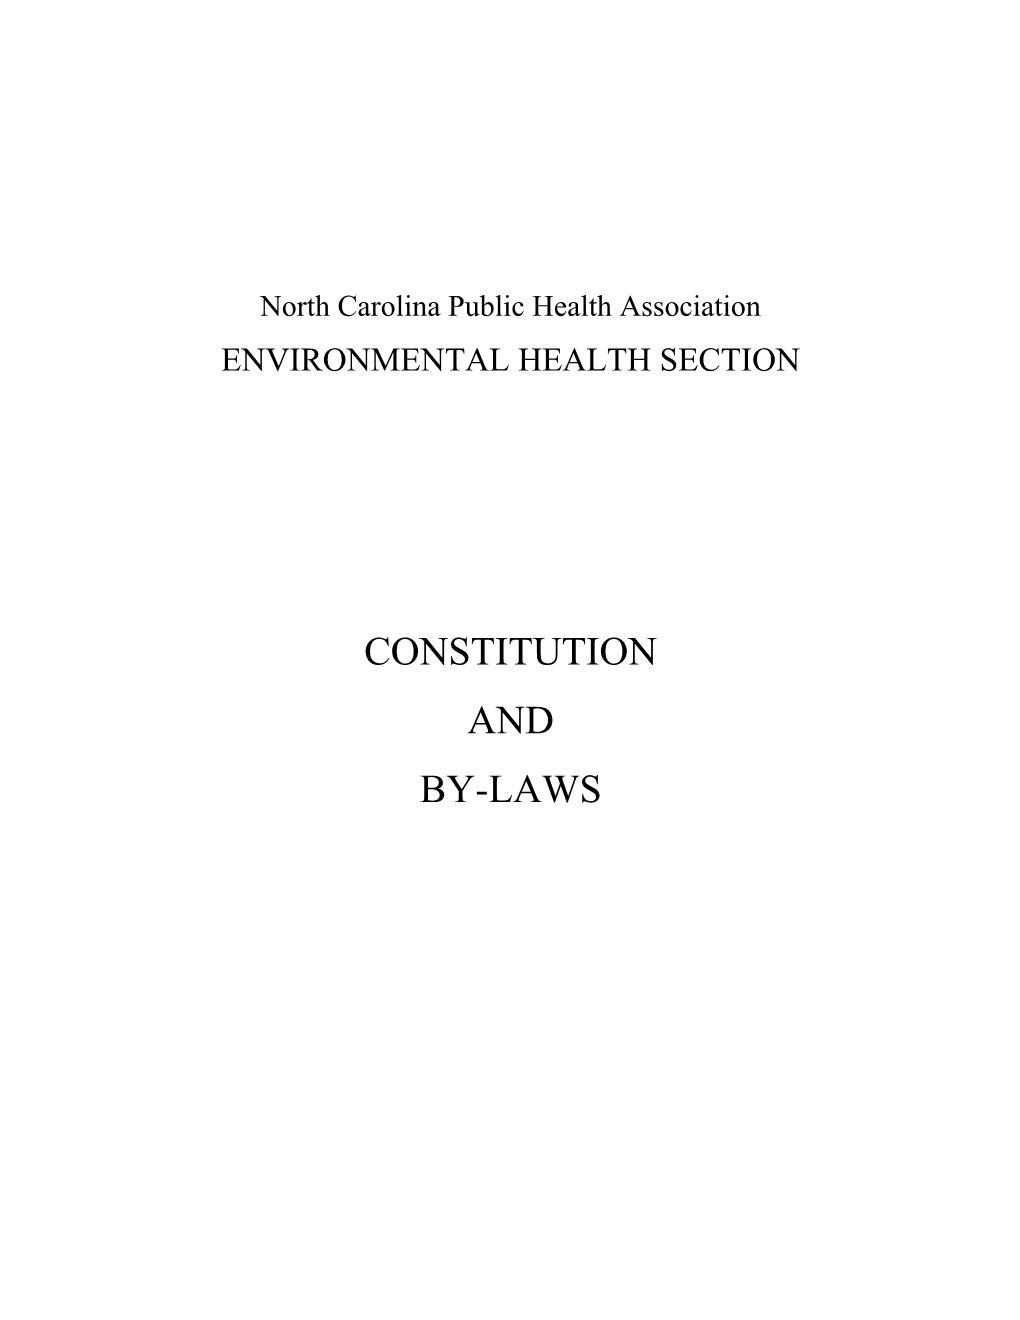 Environmental Health Section, Ncpha, Inc